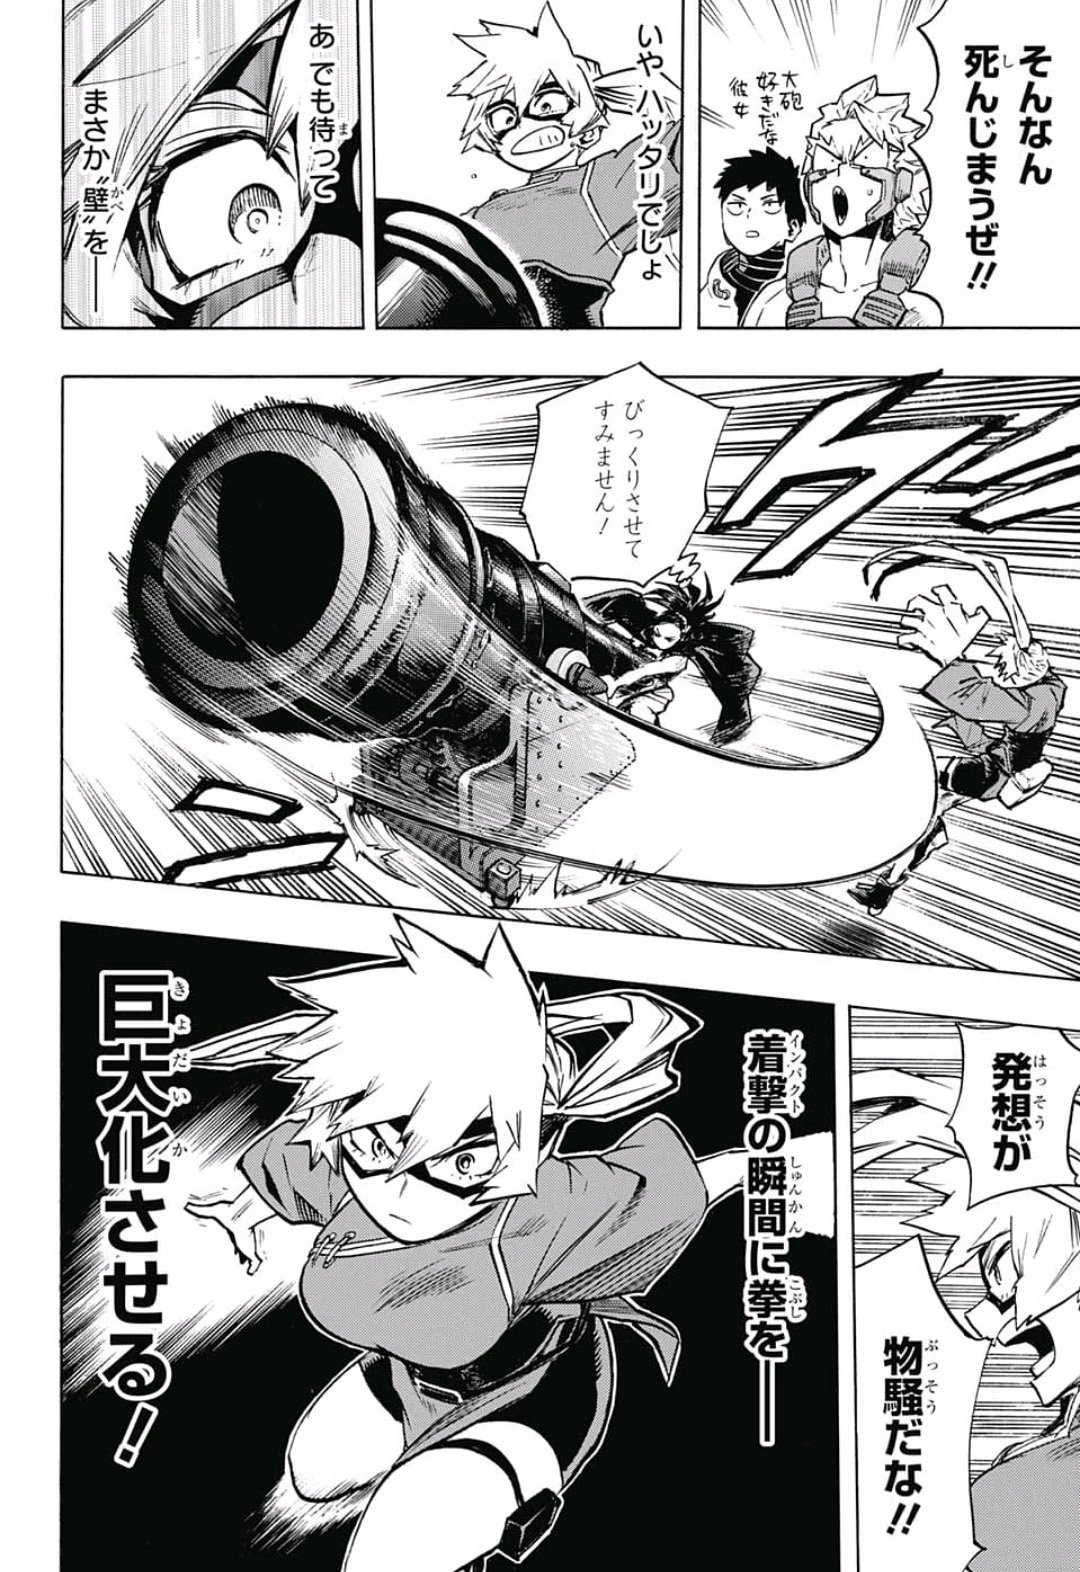 Boku no Hero Academia - Chapter 201 - Page 2